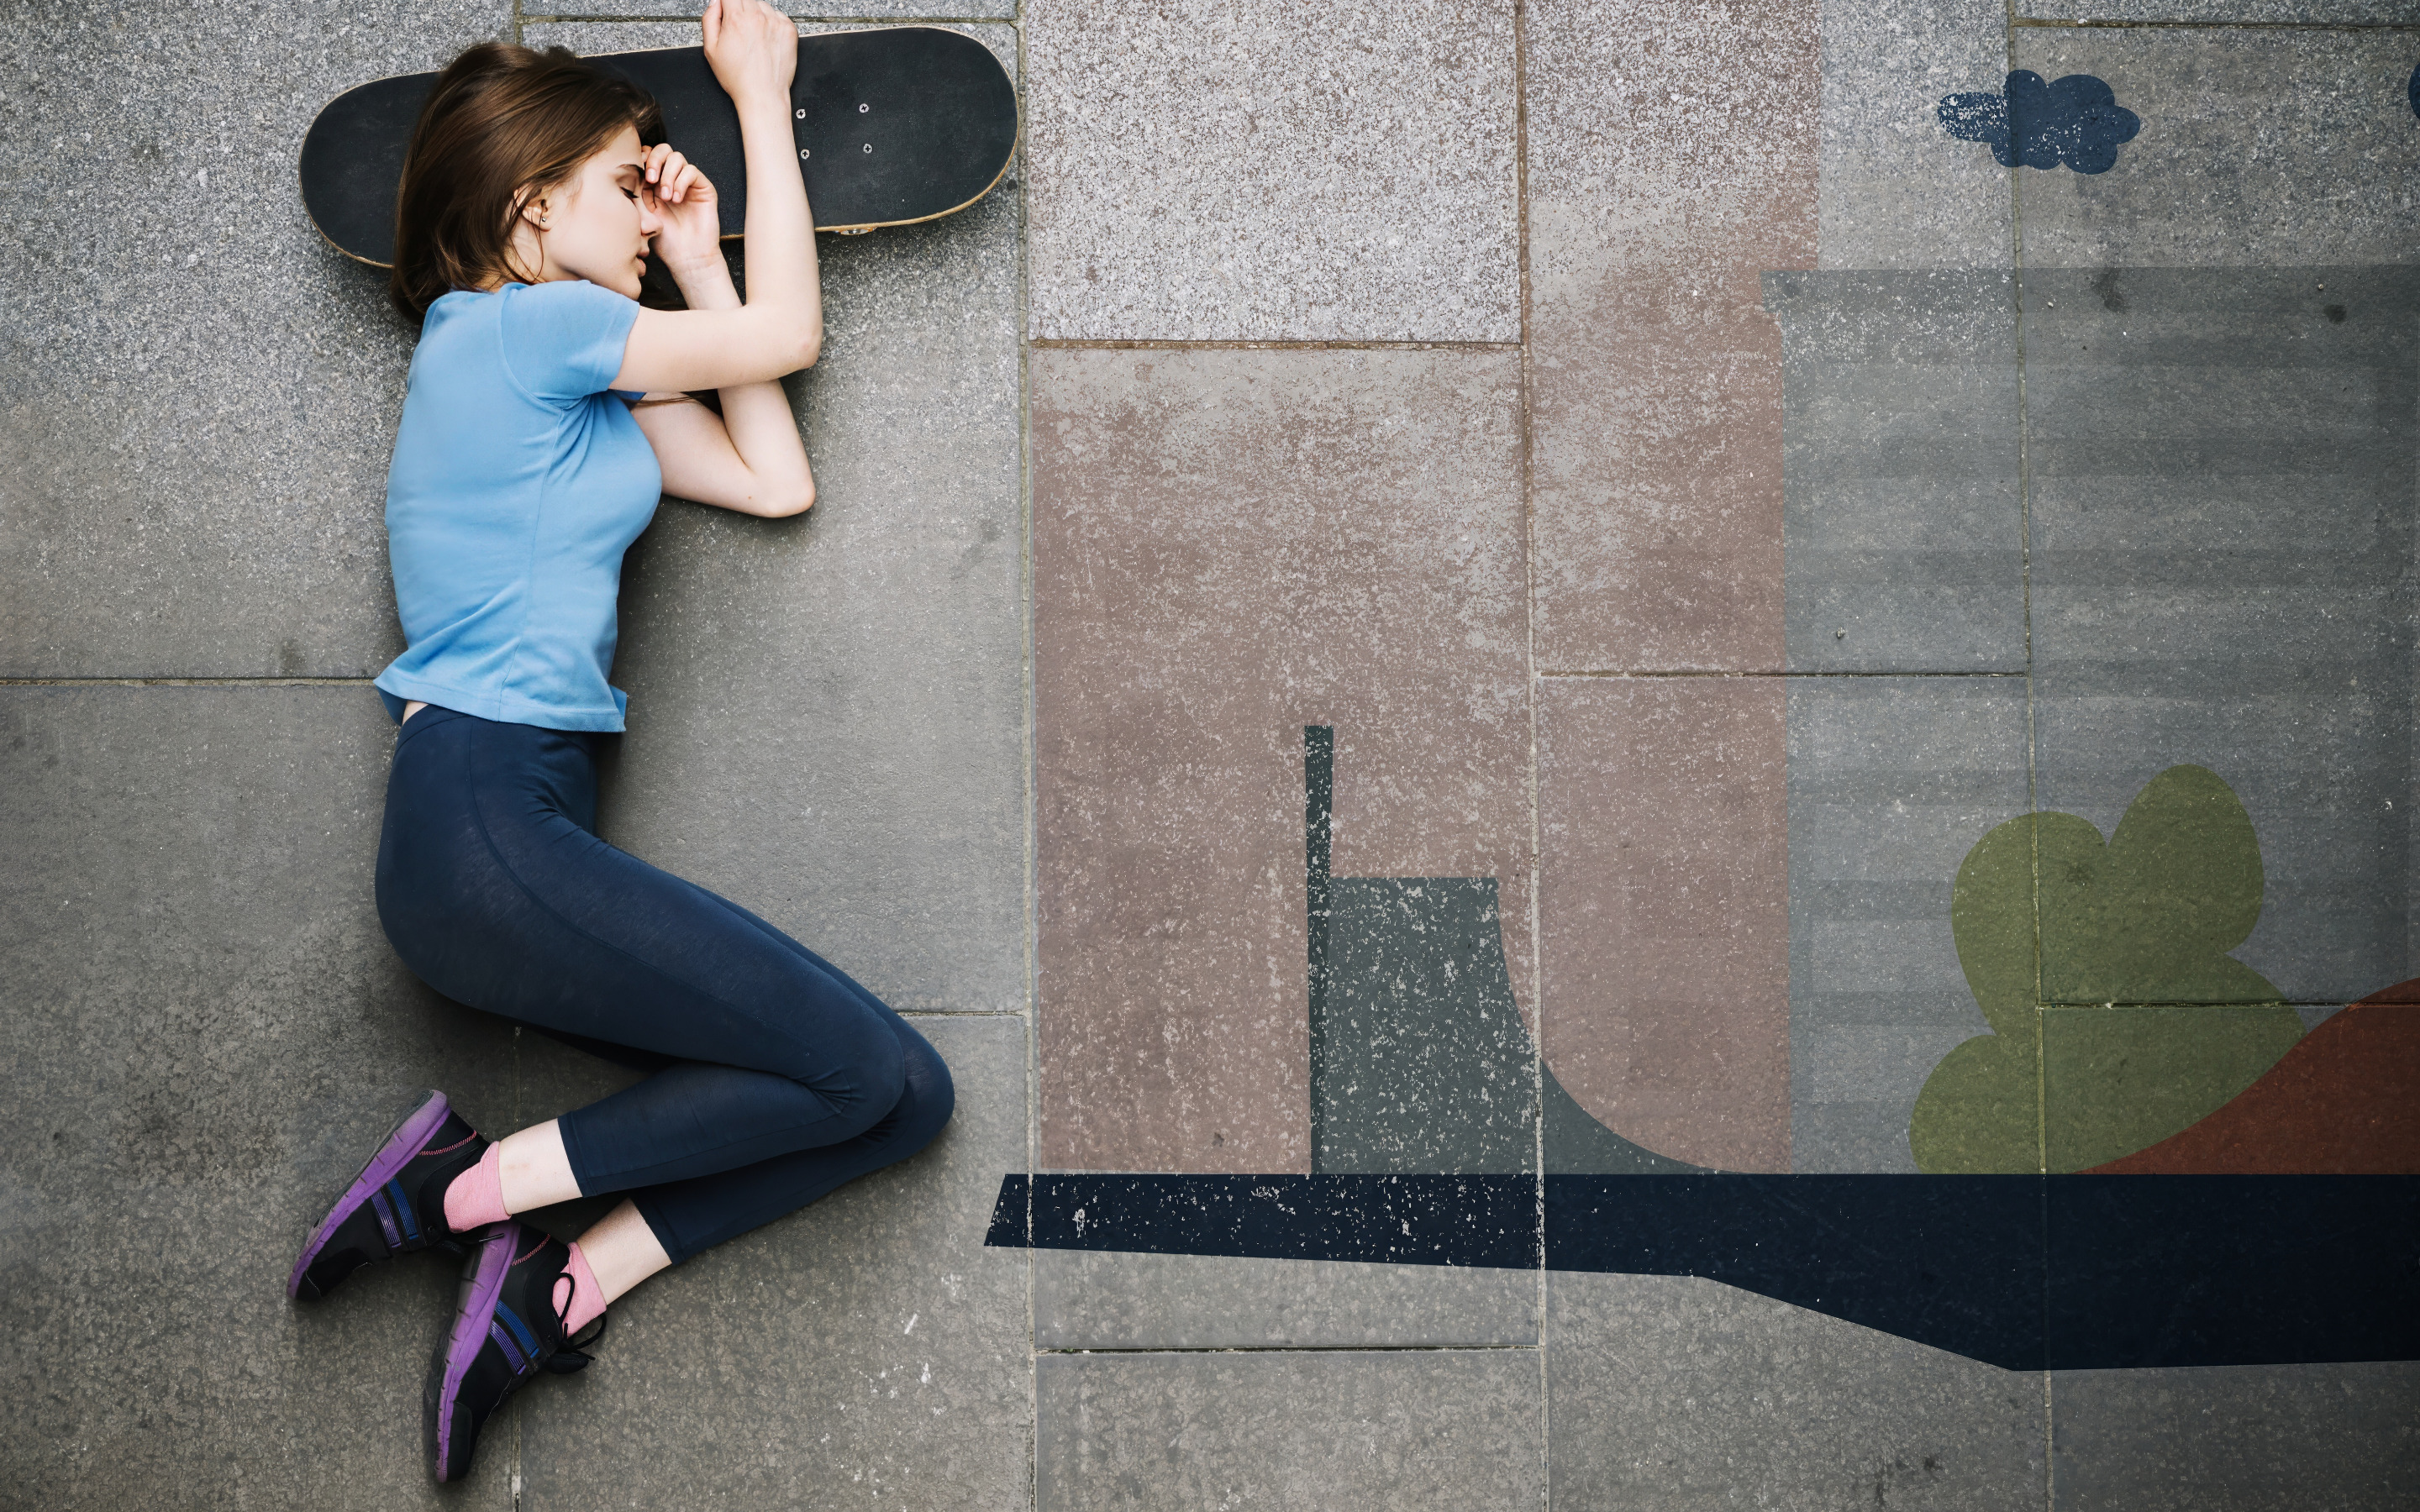 Model Blue T Shirt Blue Pants Shoes Lying On Side Sleeping On The Floor Hand On Face Women Skateboar 2880x1800